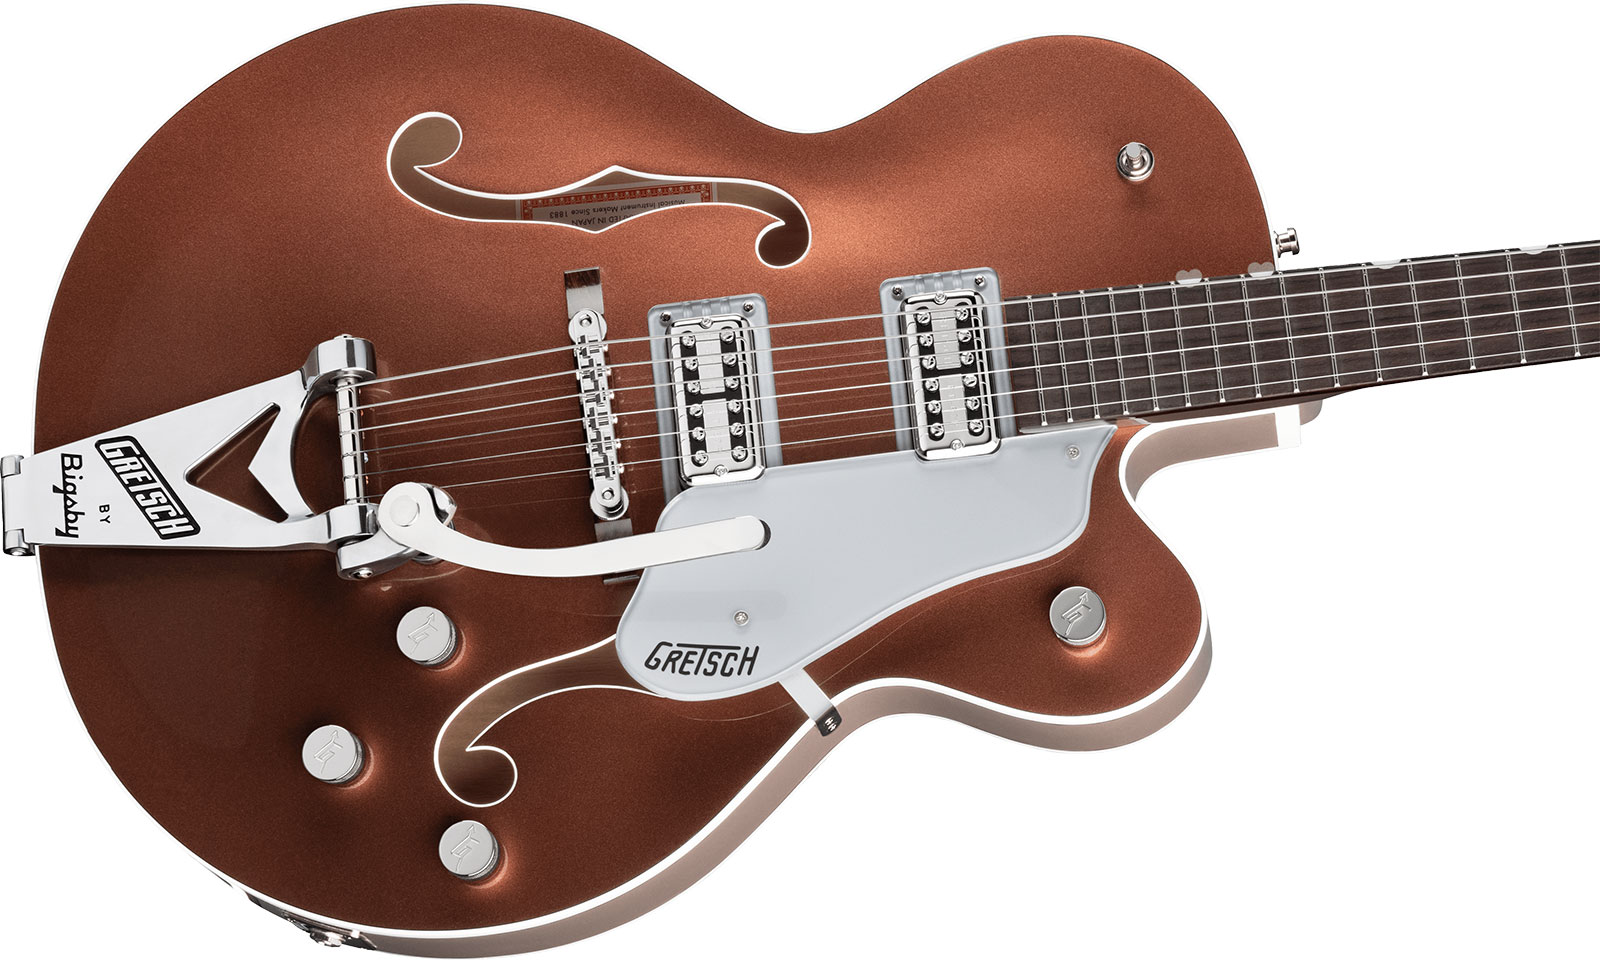 Gretsch G6118tg Players Edition Anniversary Nashville Pro Jap Bigsby Eb - 2-tone Copper/sahara Metallic - Semi-hollow electric guitar - Variation 2